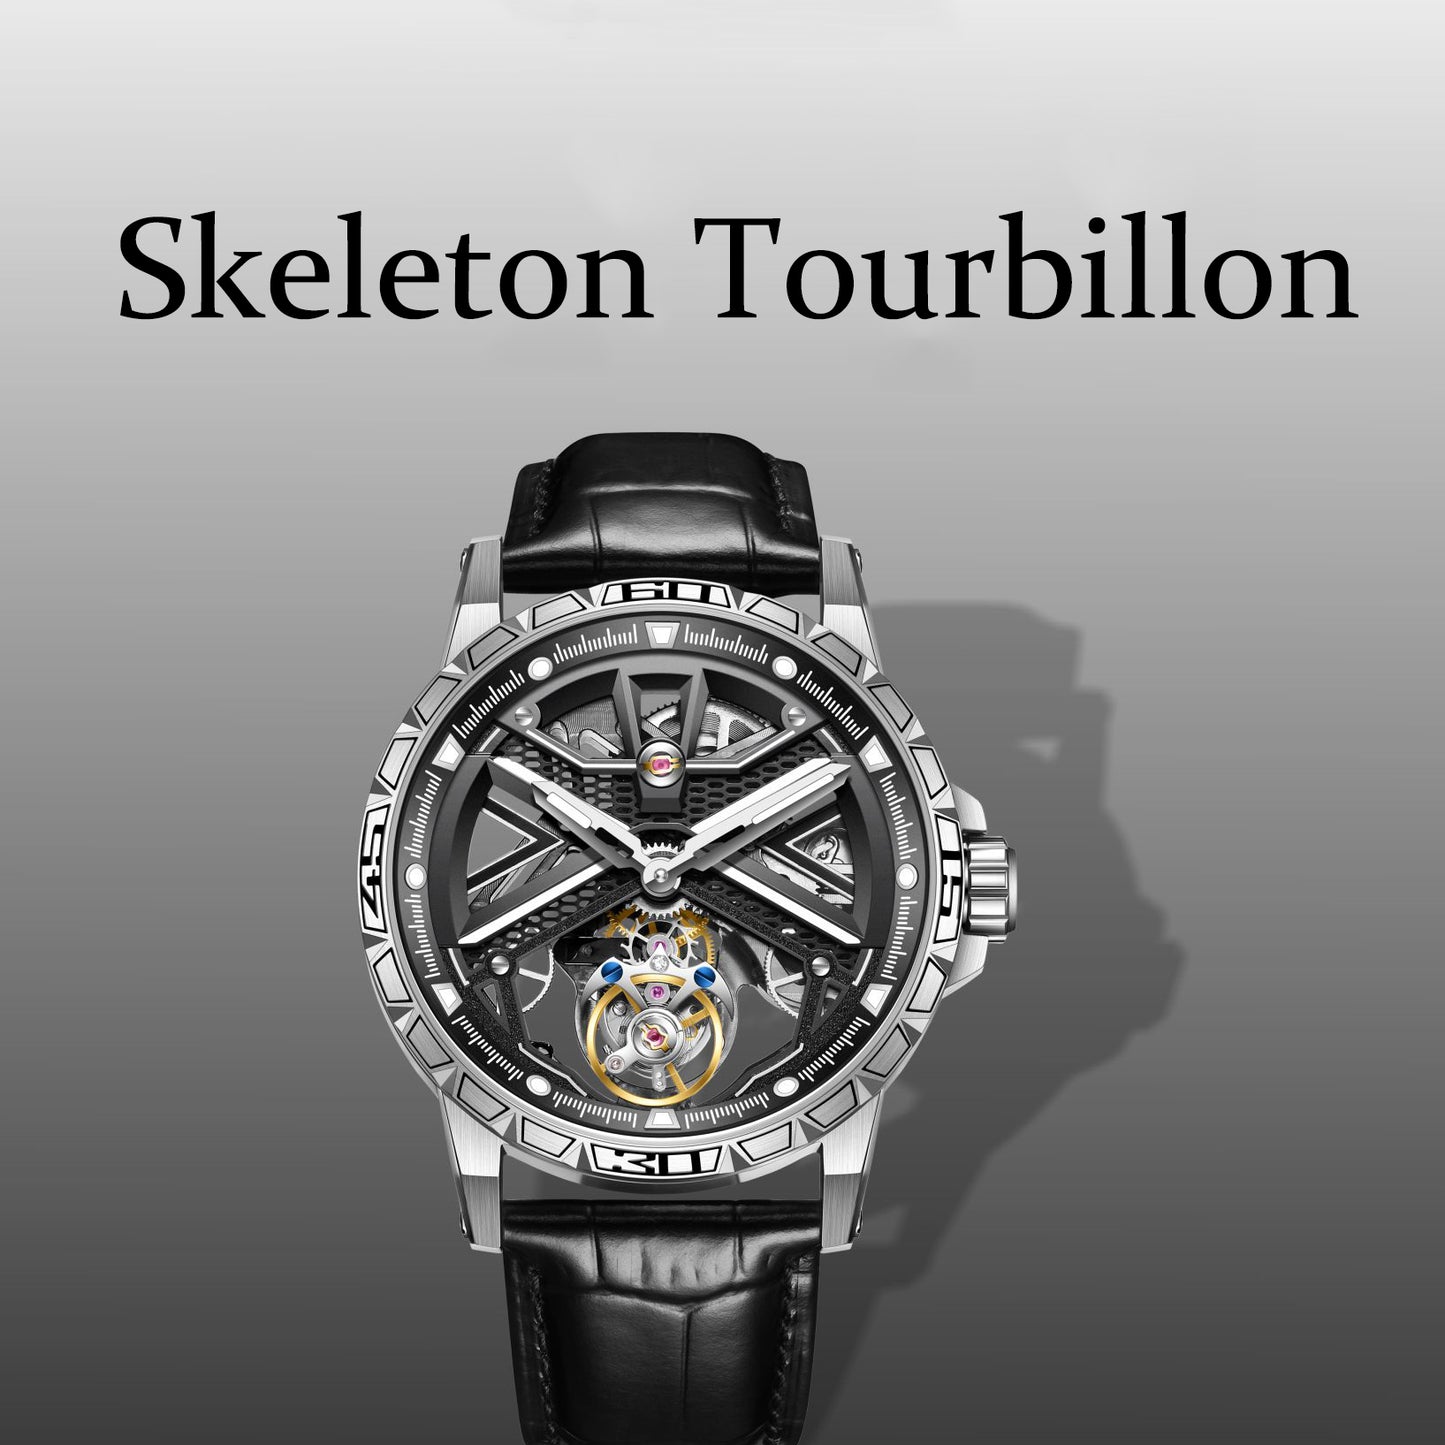 Aesop Original Tourbillon Skeleton Dial Manual Winding Mechanical Wrist Watch 7063